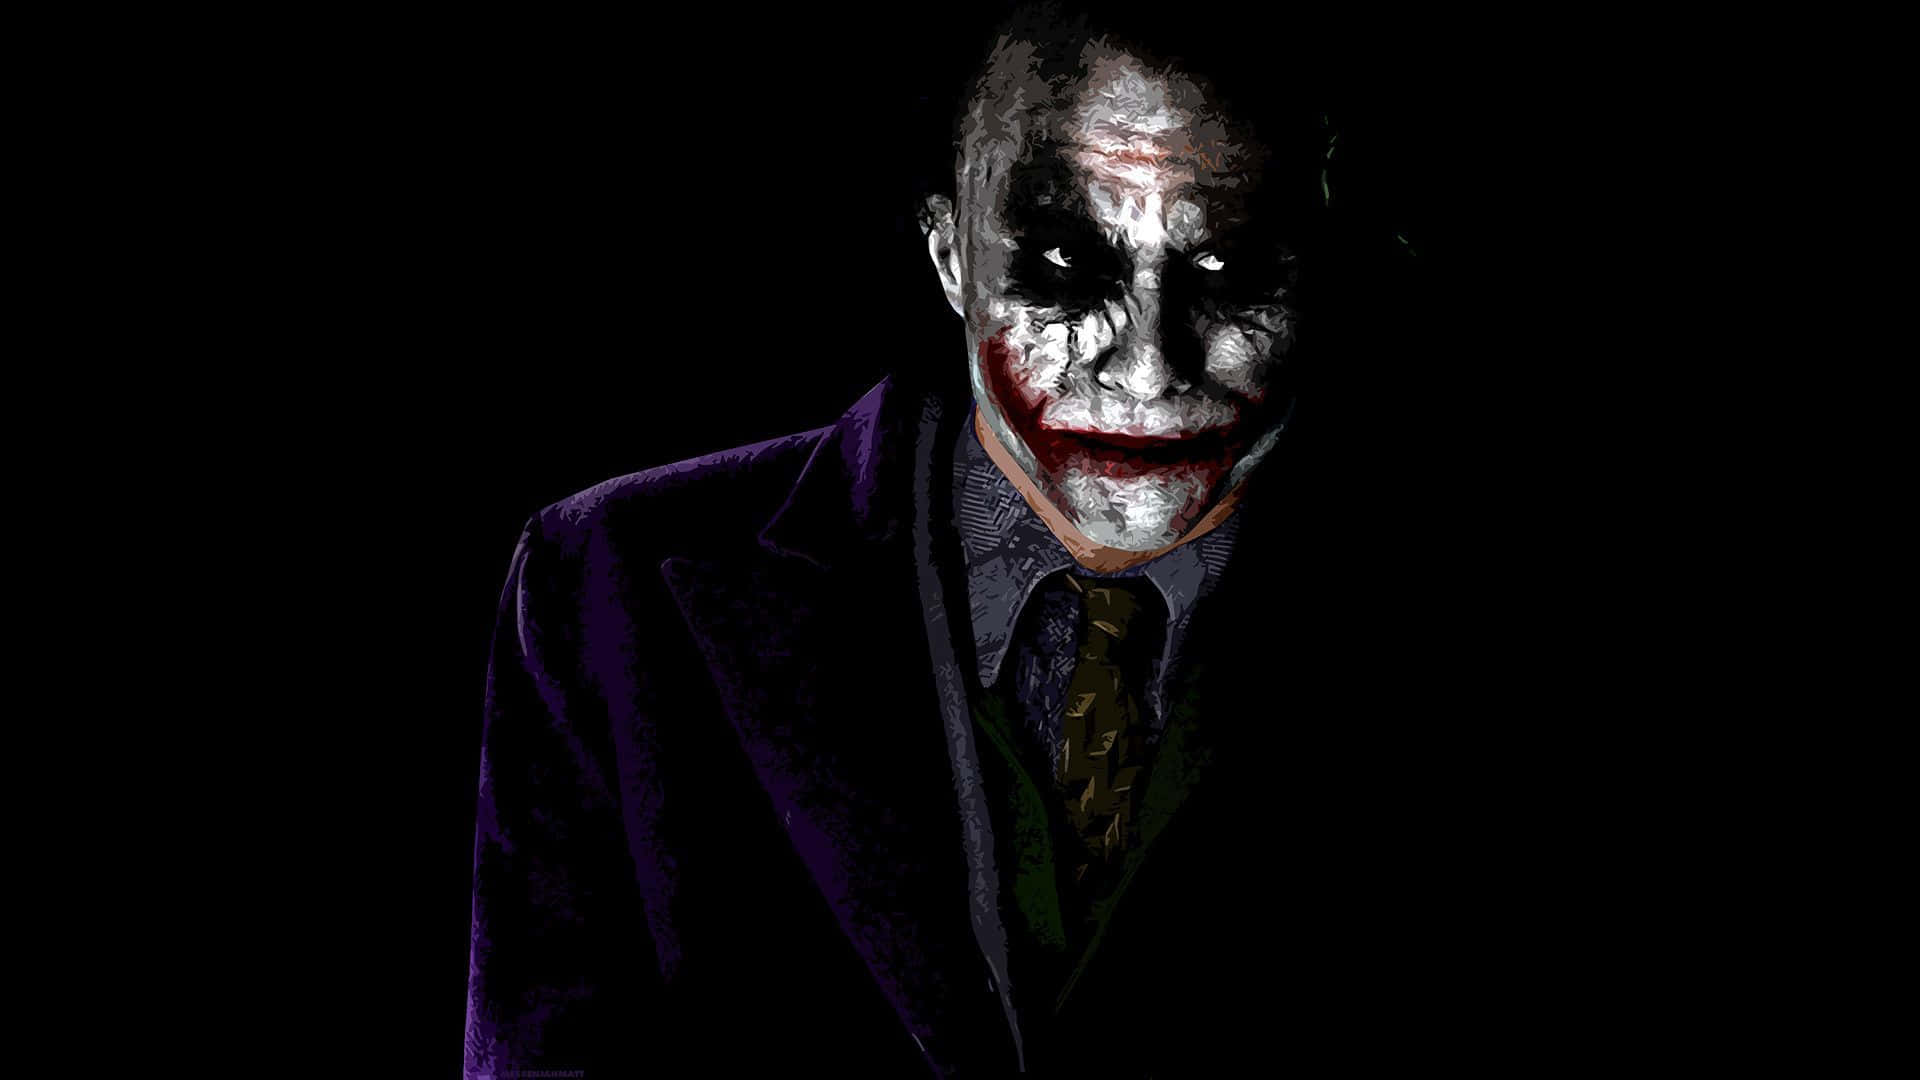 Evil Joker 1920 X 1080 Wallpaper Wallpaper